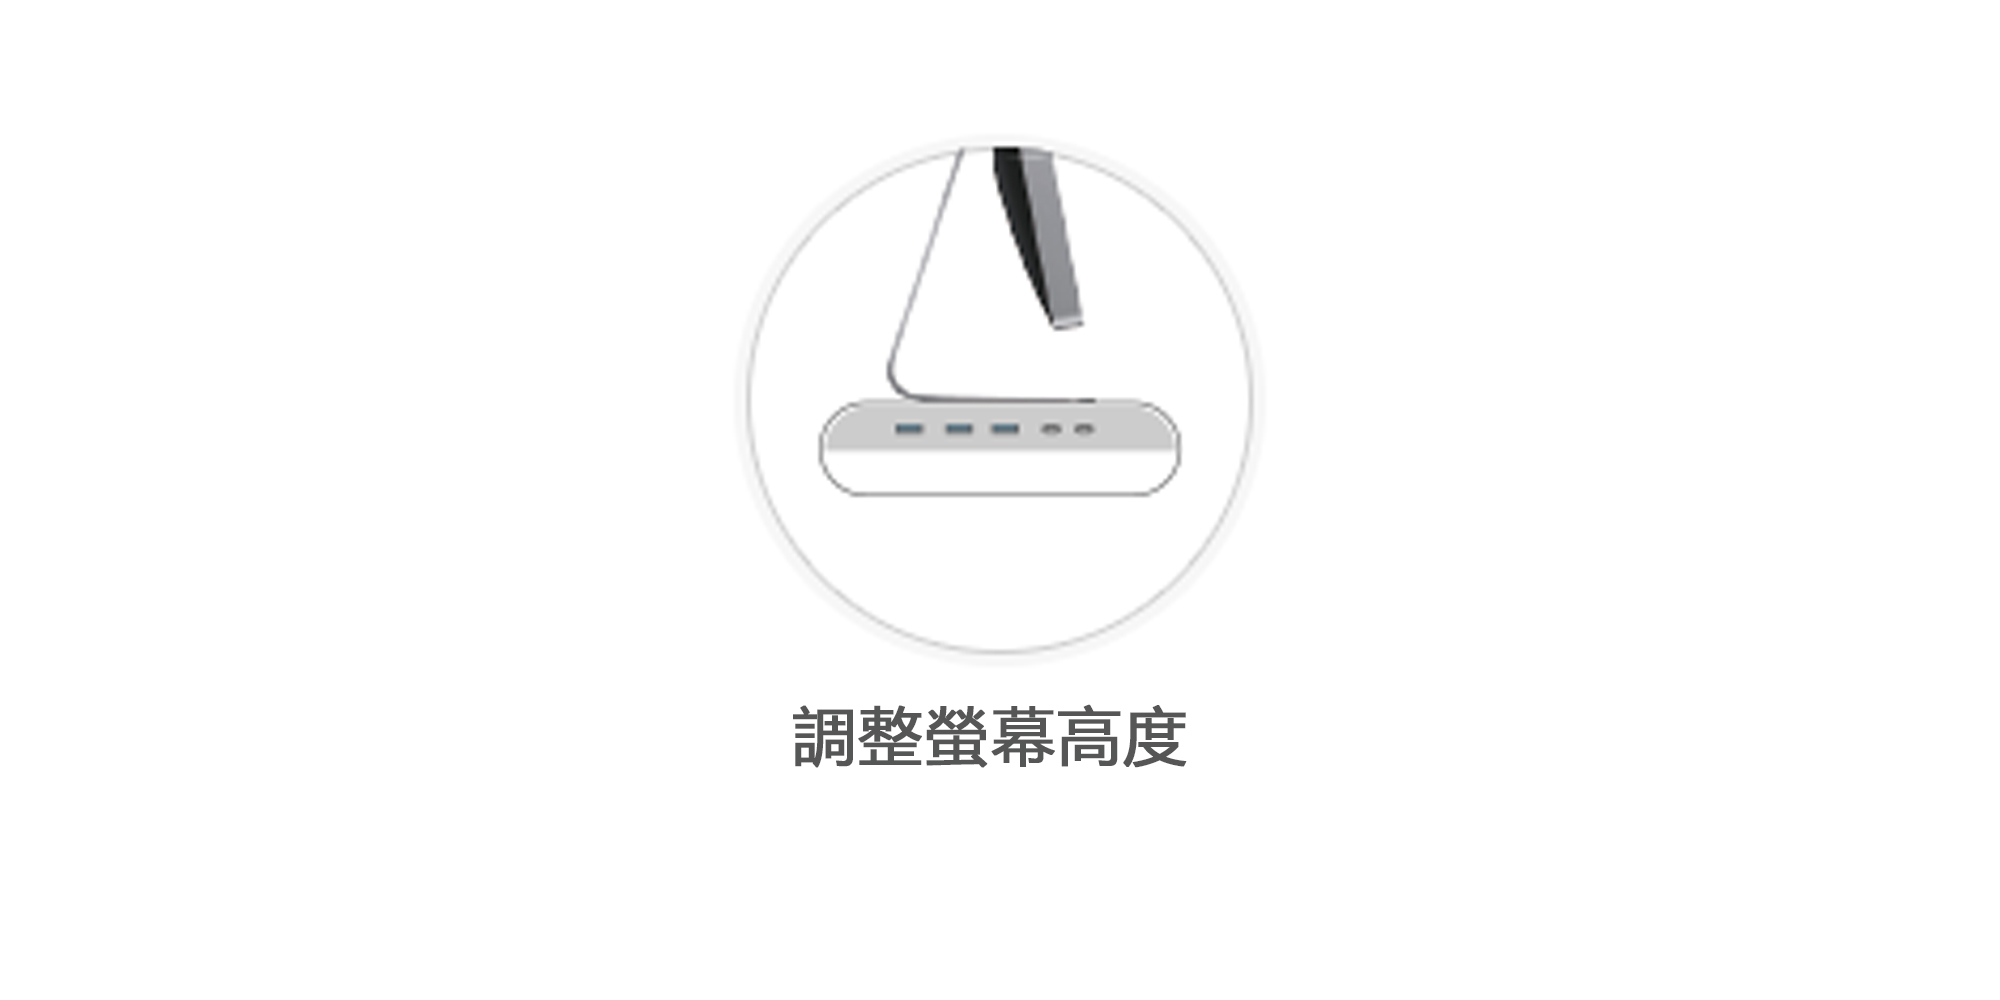 Monitormate Probase HD USB TYPE-C 多功能螢幕架(for Macbook Pro) 太空灰